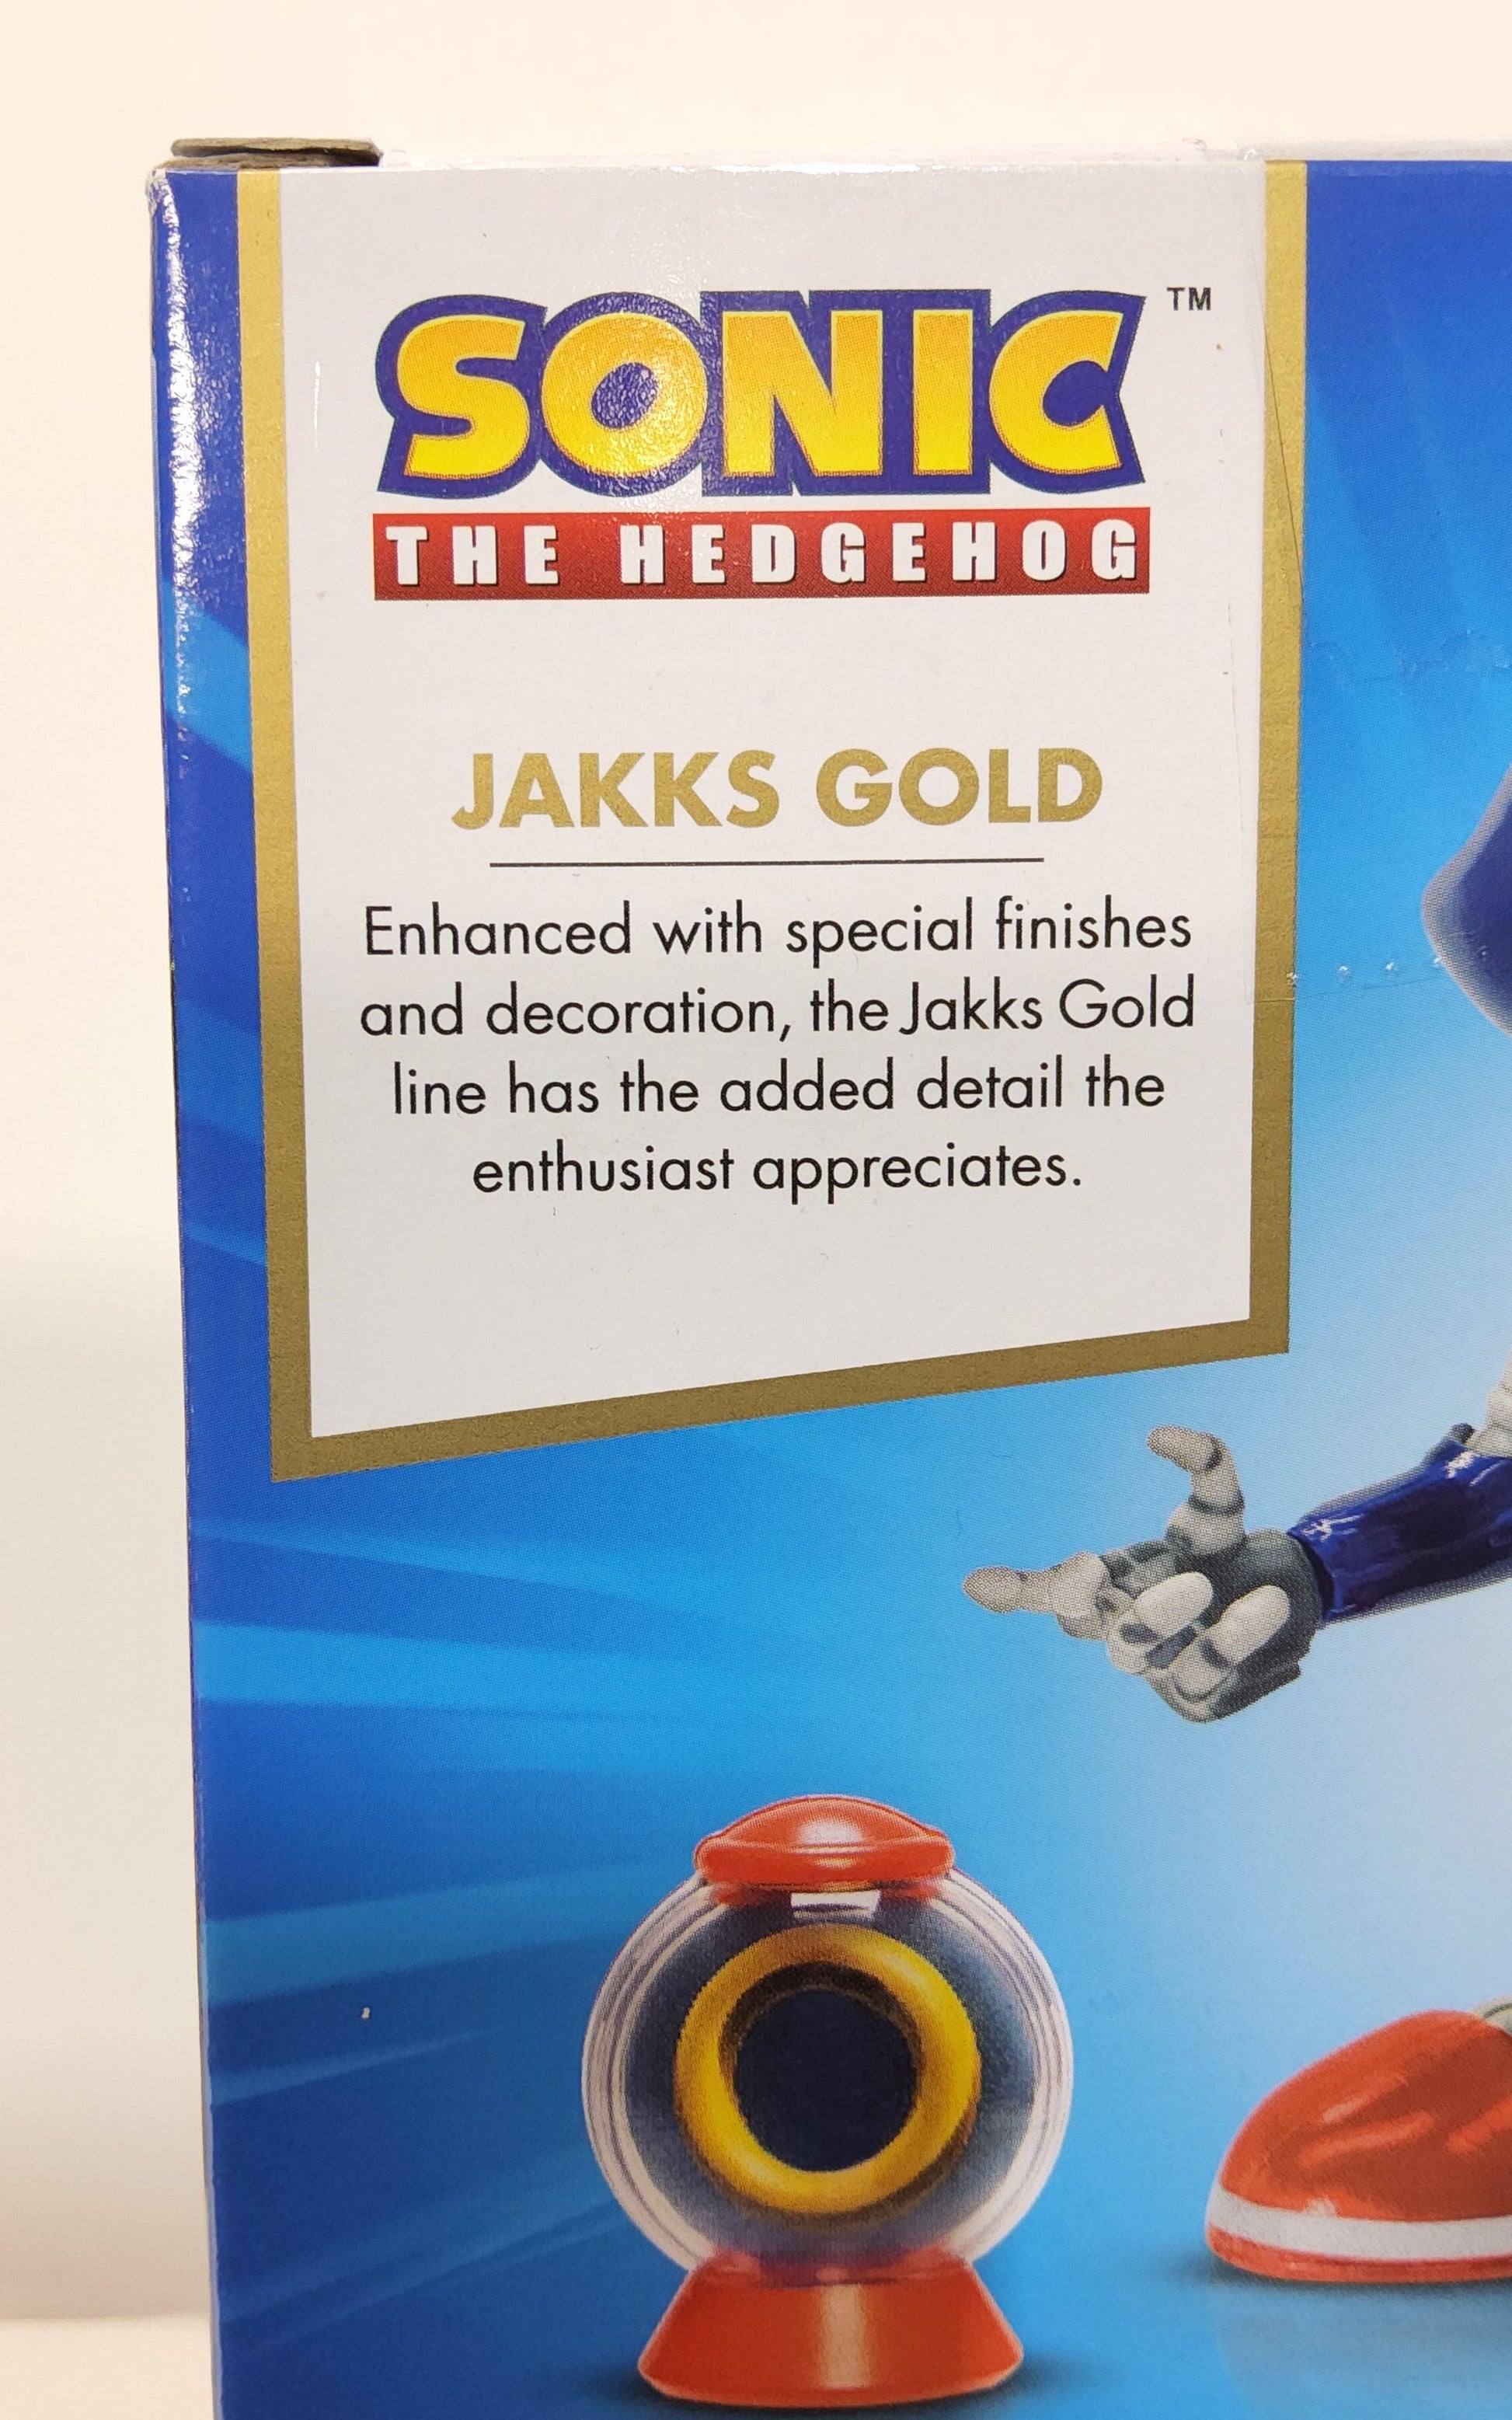 Sonic the Hedgehog 4" Metal Sonic Action Figure Exclusive Jakks Gold Edition - Logan's Toy Chest